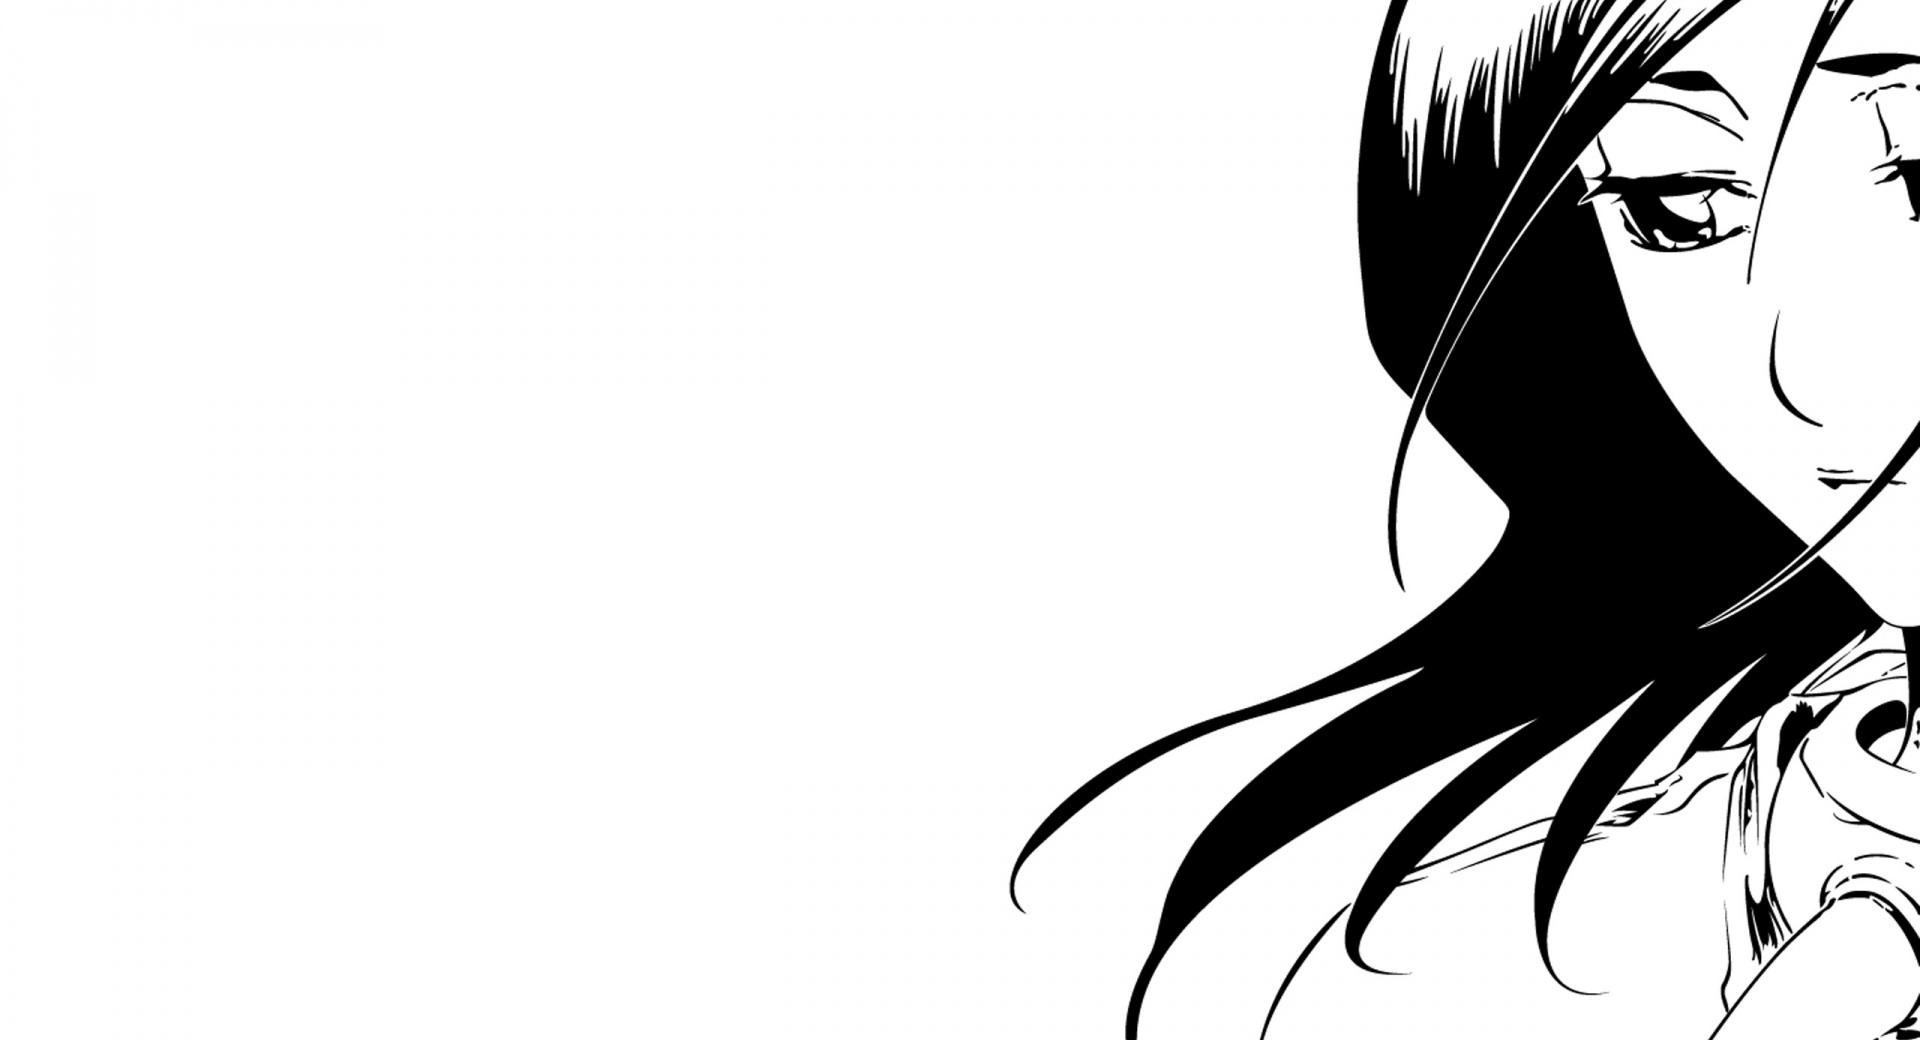 Melancholy Girl Manga at 1024 x 768 size wallpapers HD quality